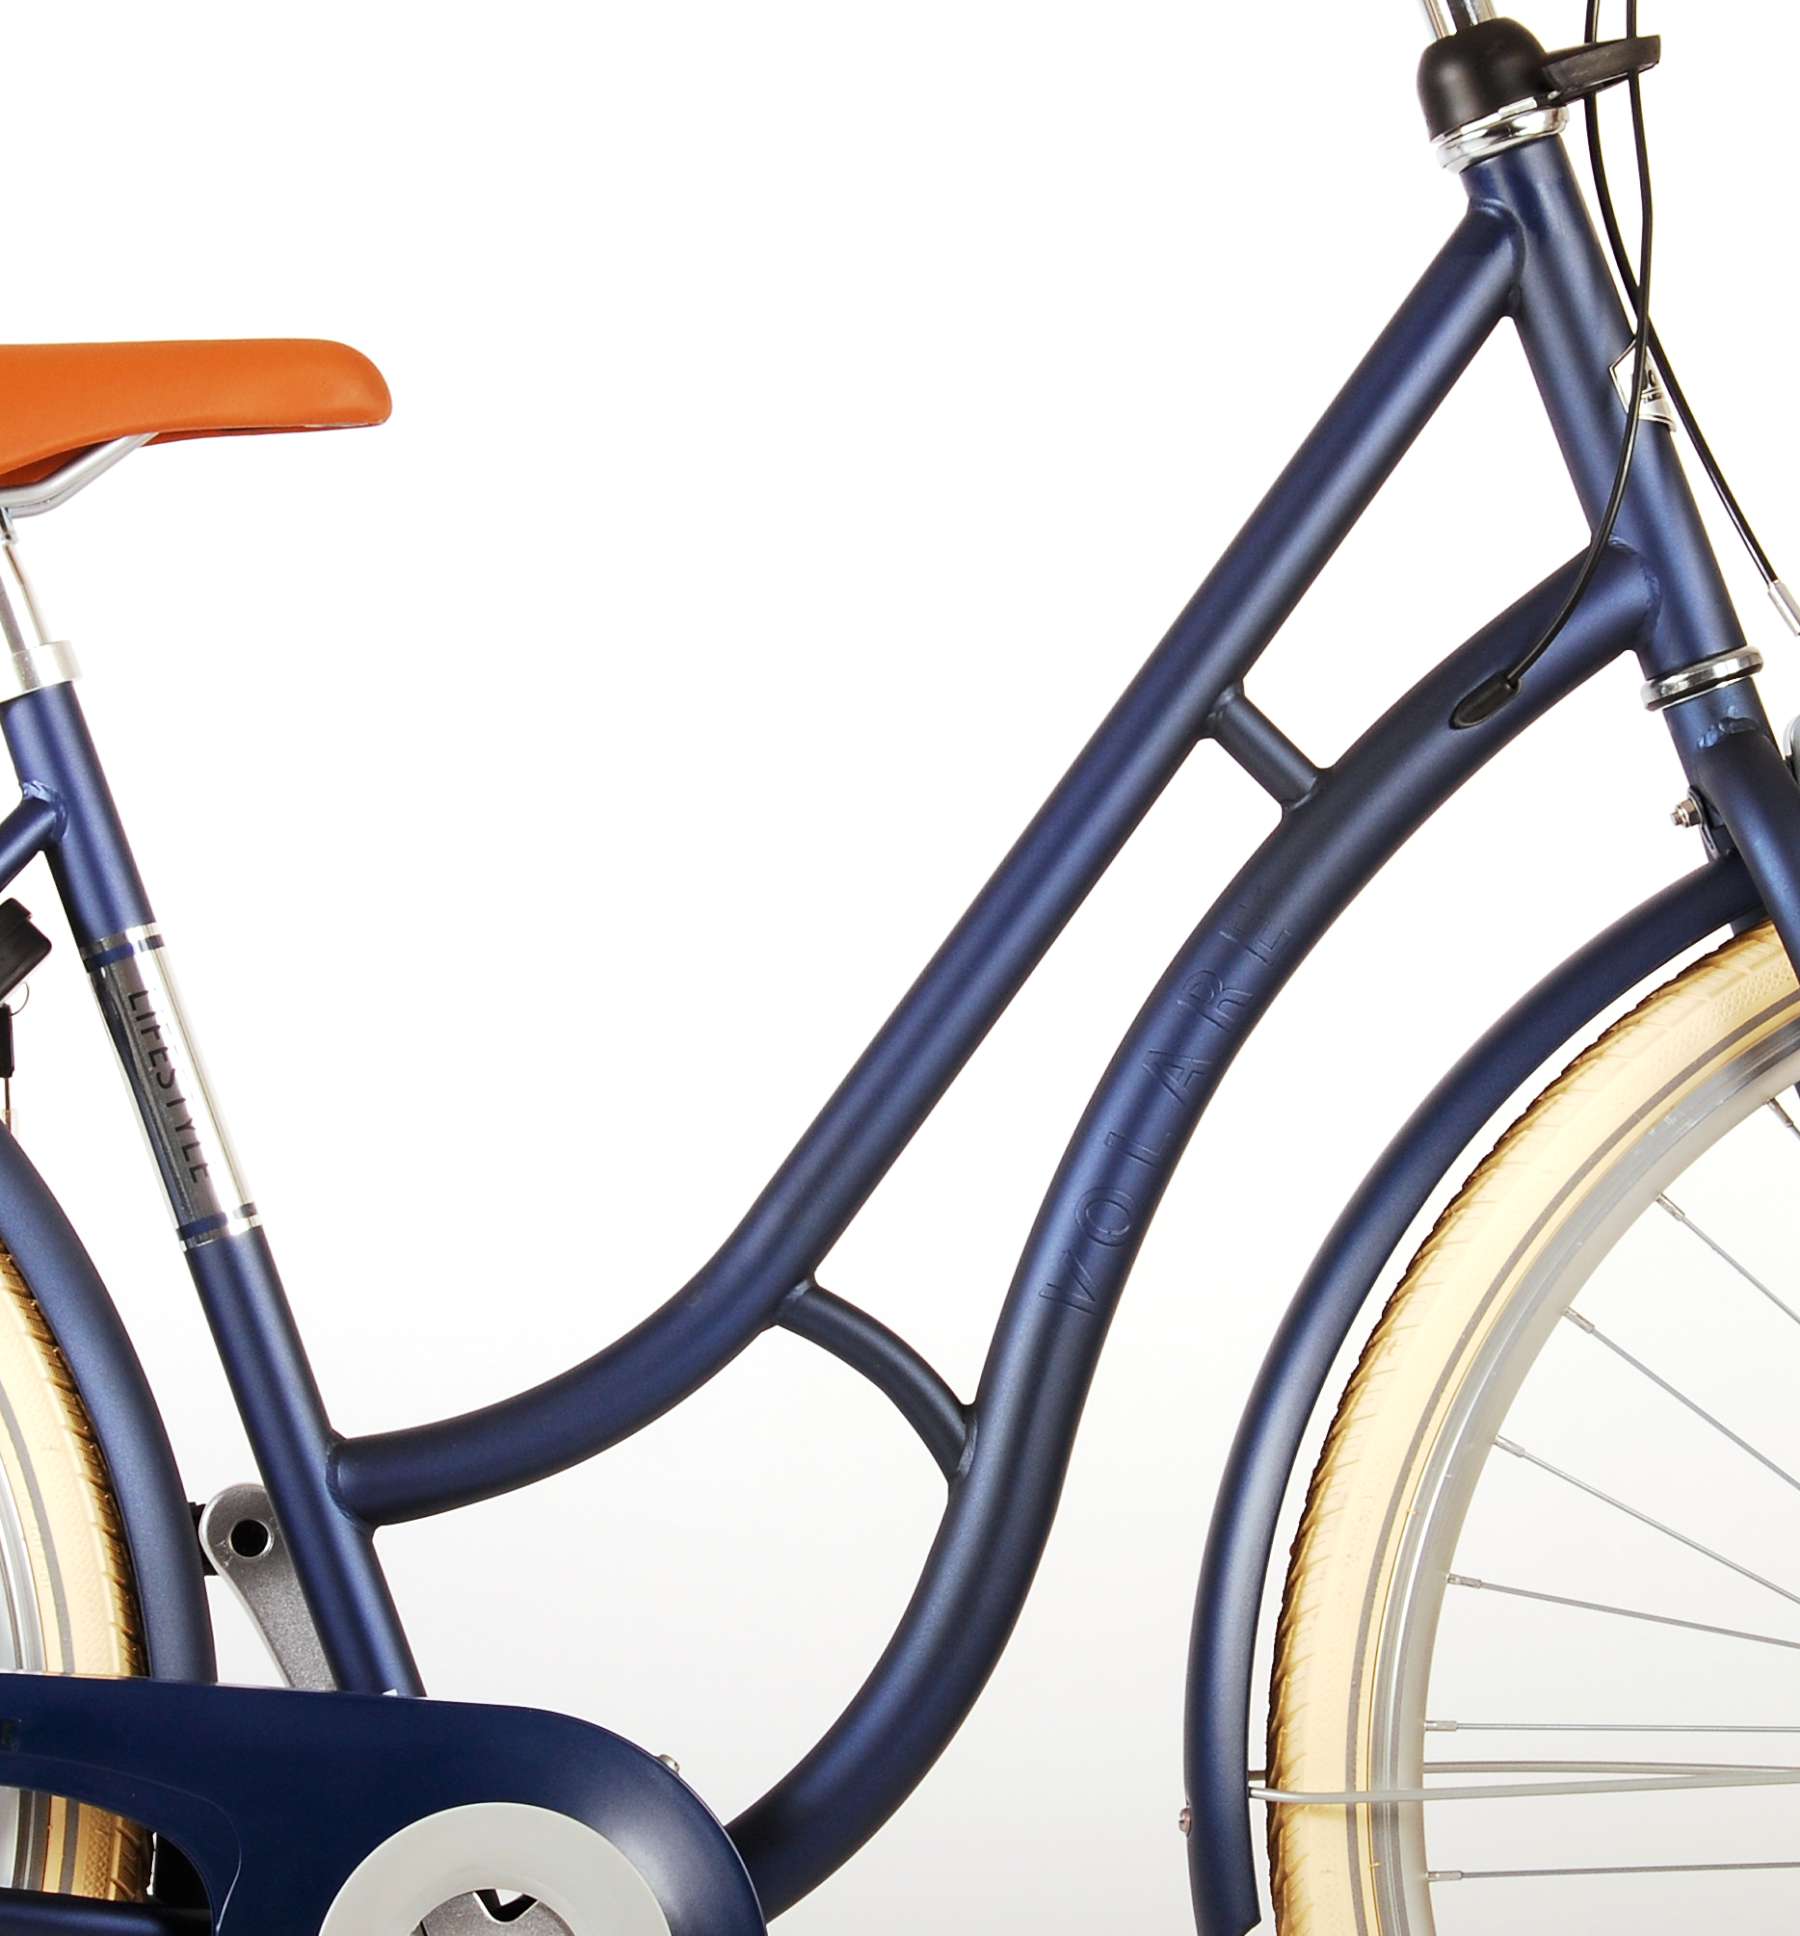 Damenrad Lifestyle für Frauen 28 Zoll in Blau, 3 Gänge Fahrrad